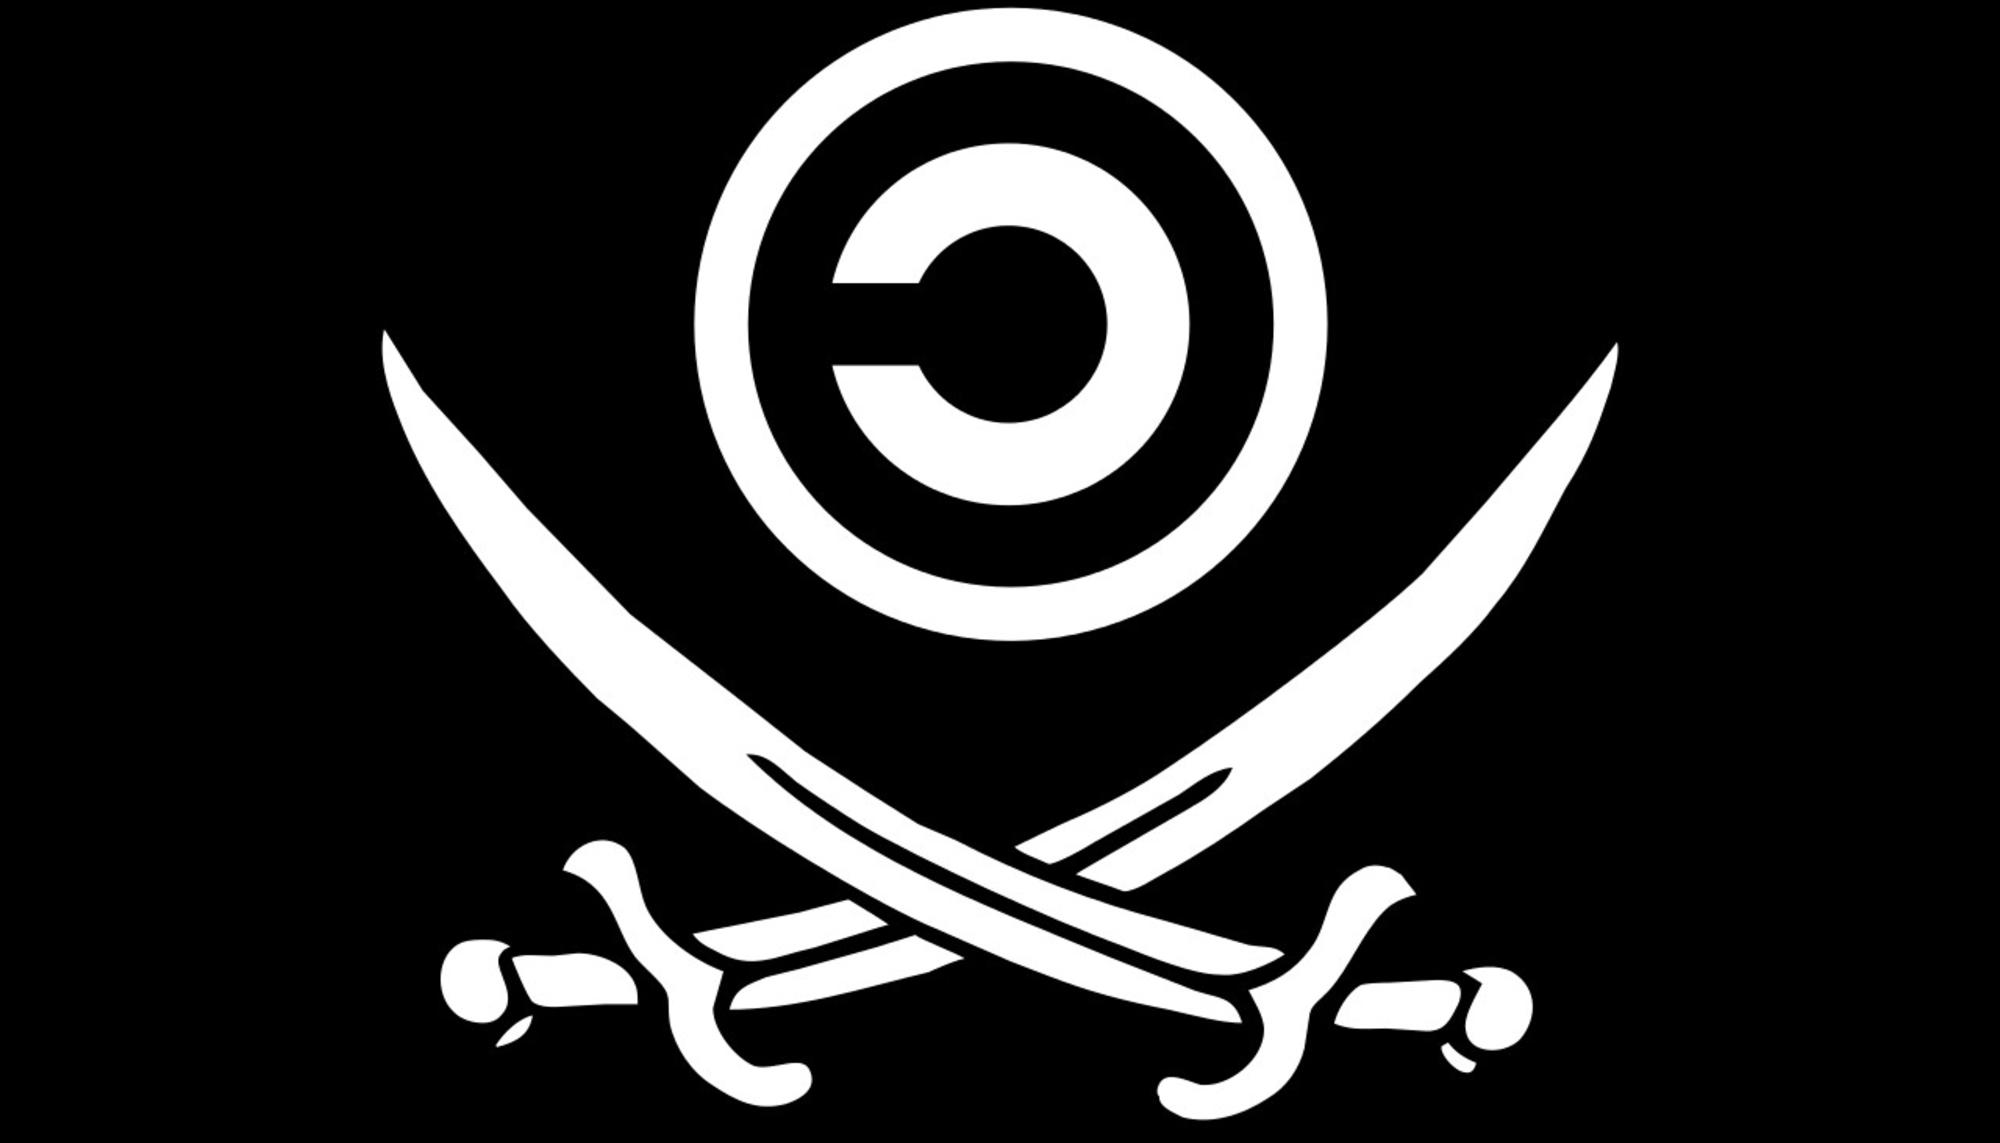 Copyleft Pirate symbol